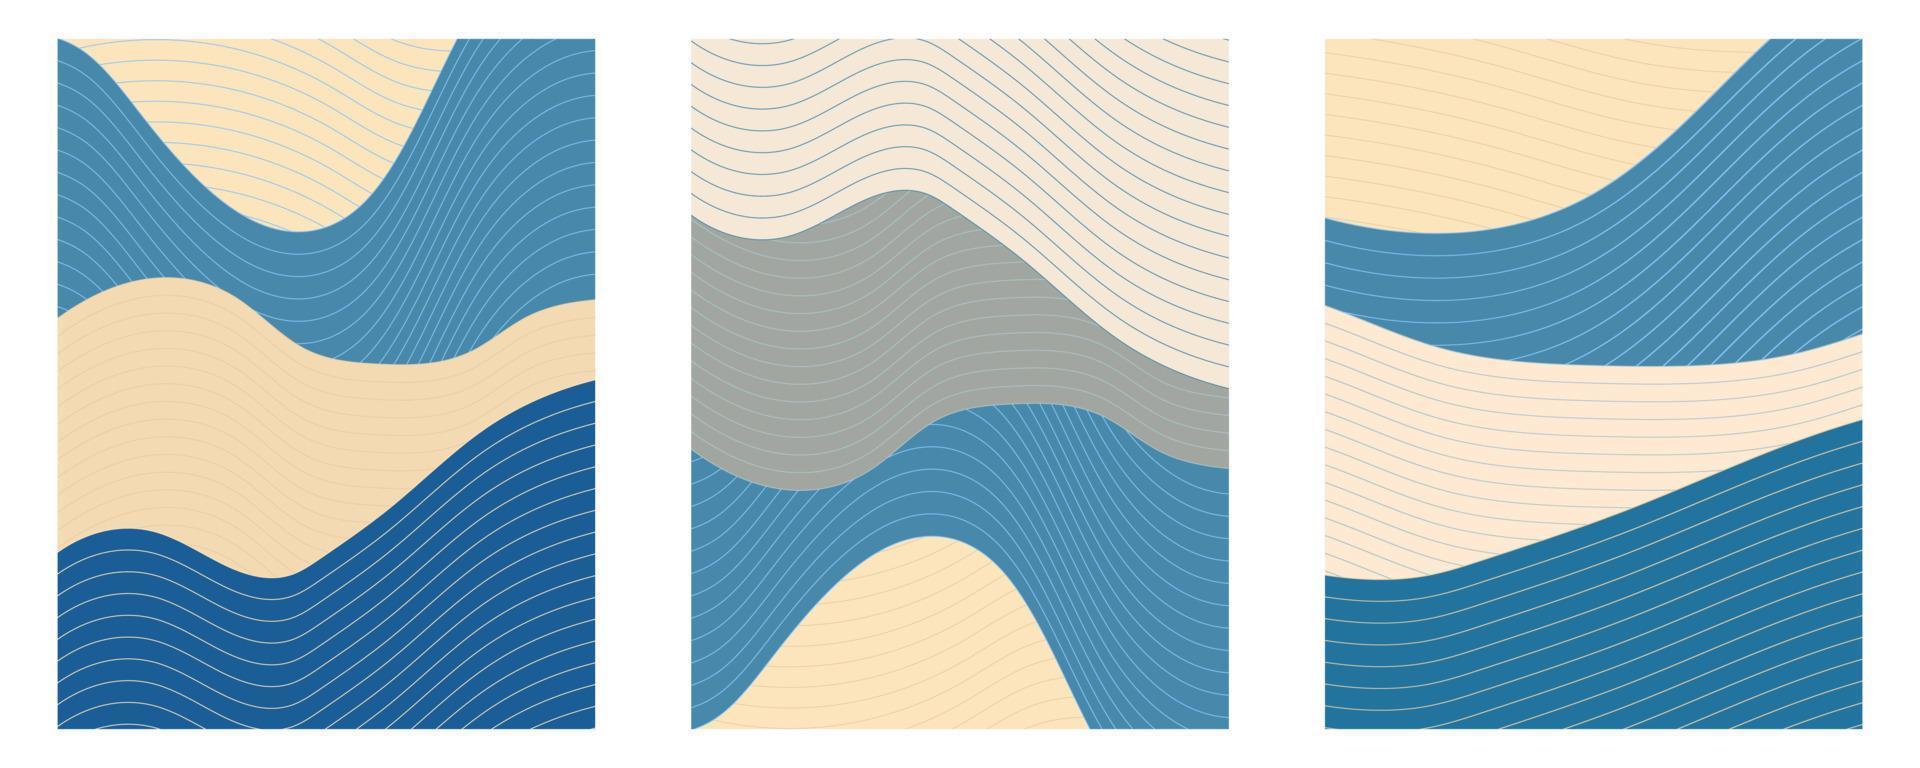 flytande japansk ocean wave vintage i blått och beige. uppsättning affisch vektor mönster med linje element.